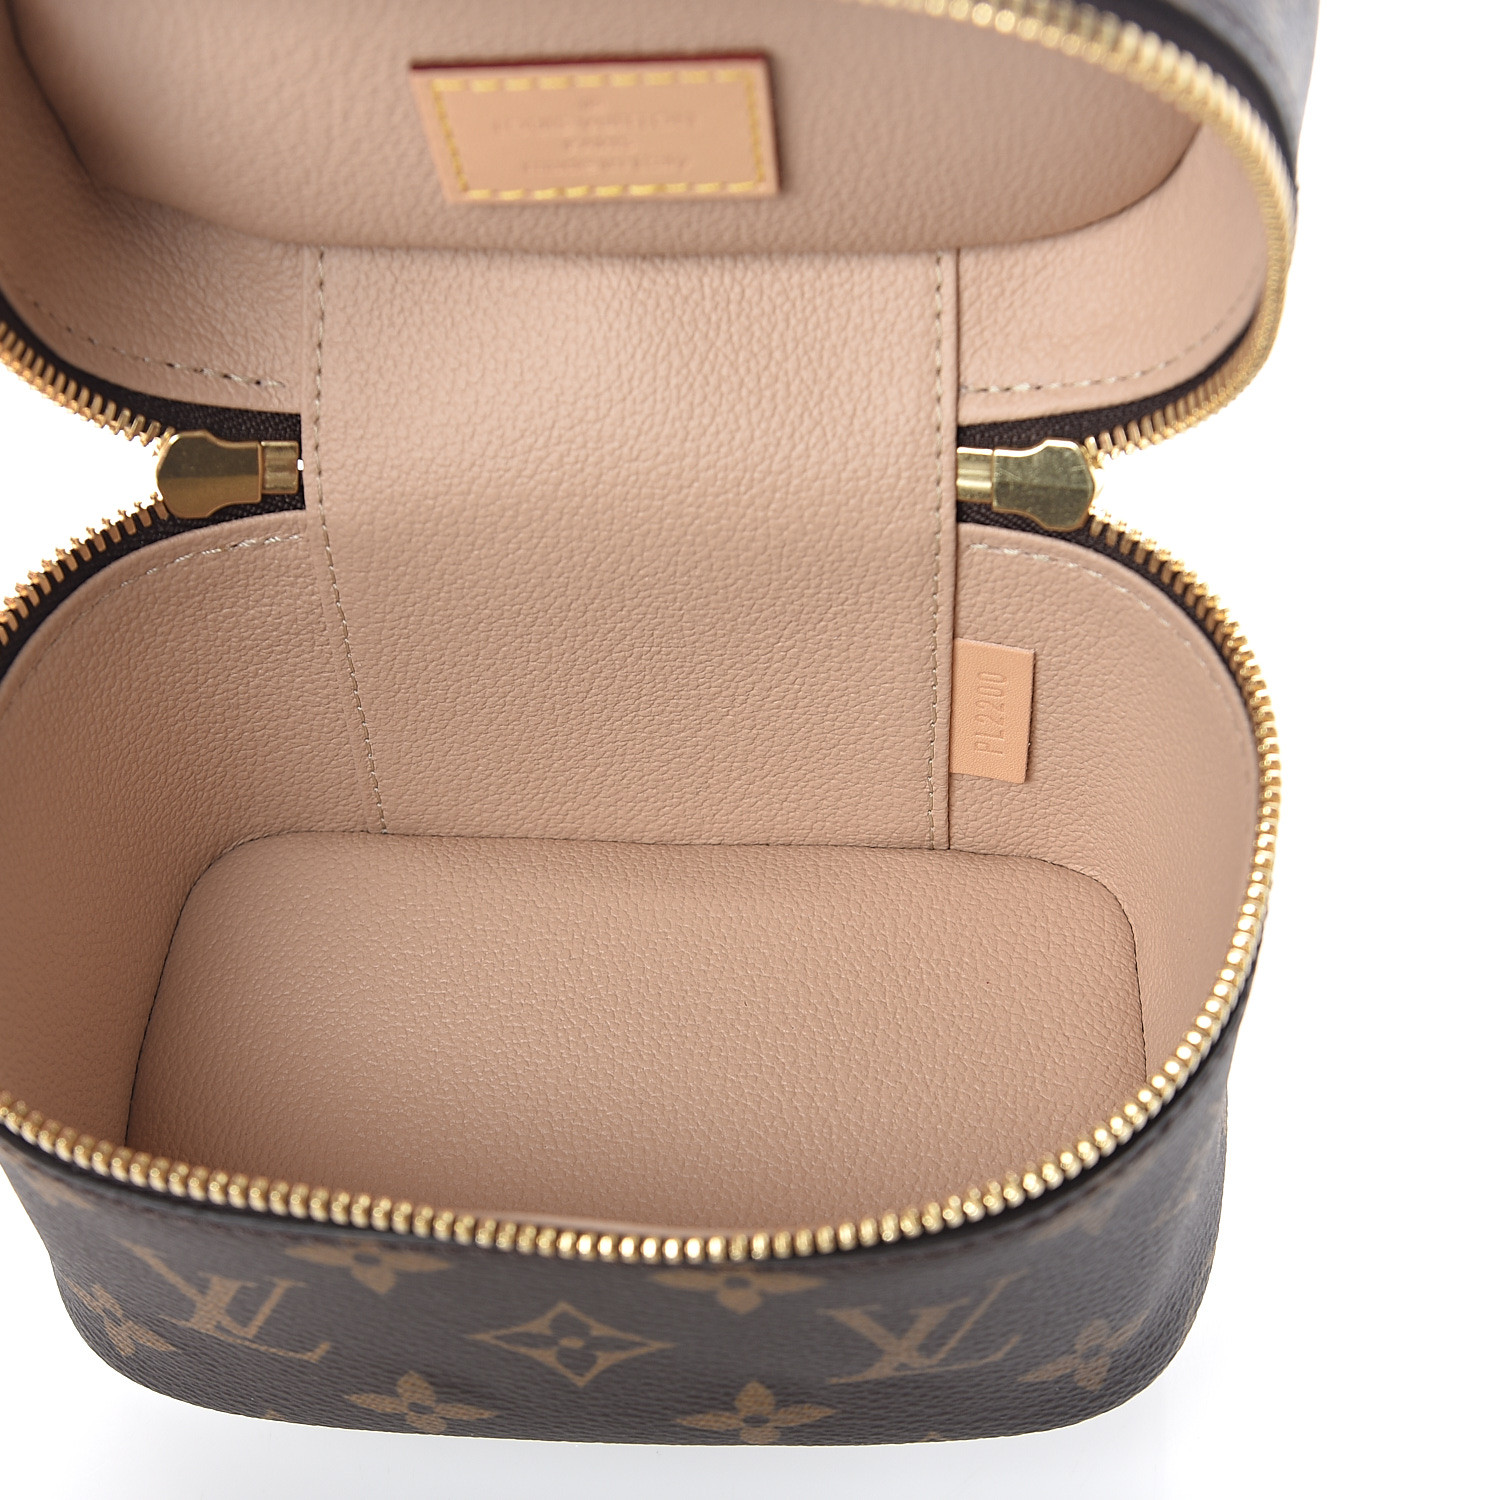 Bag Reveal: Louis Vuitton Nice Nano - Love Settle